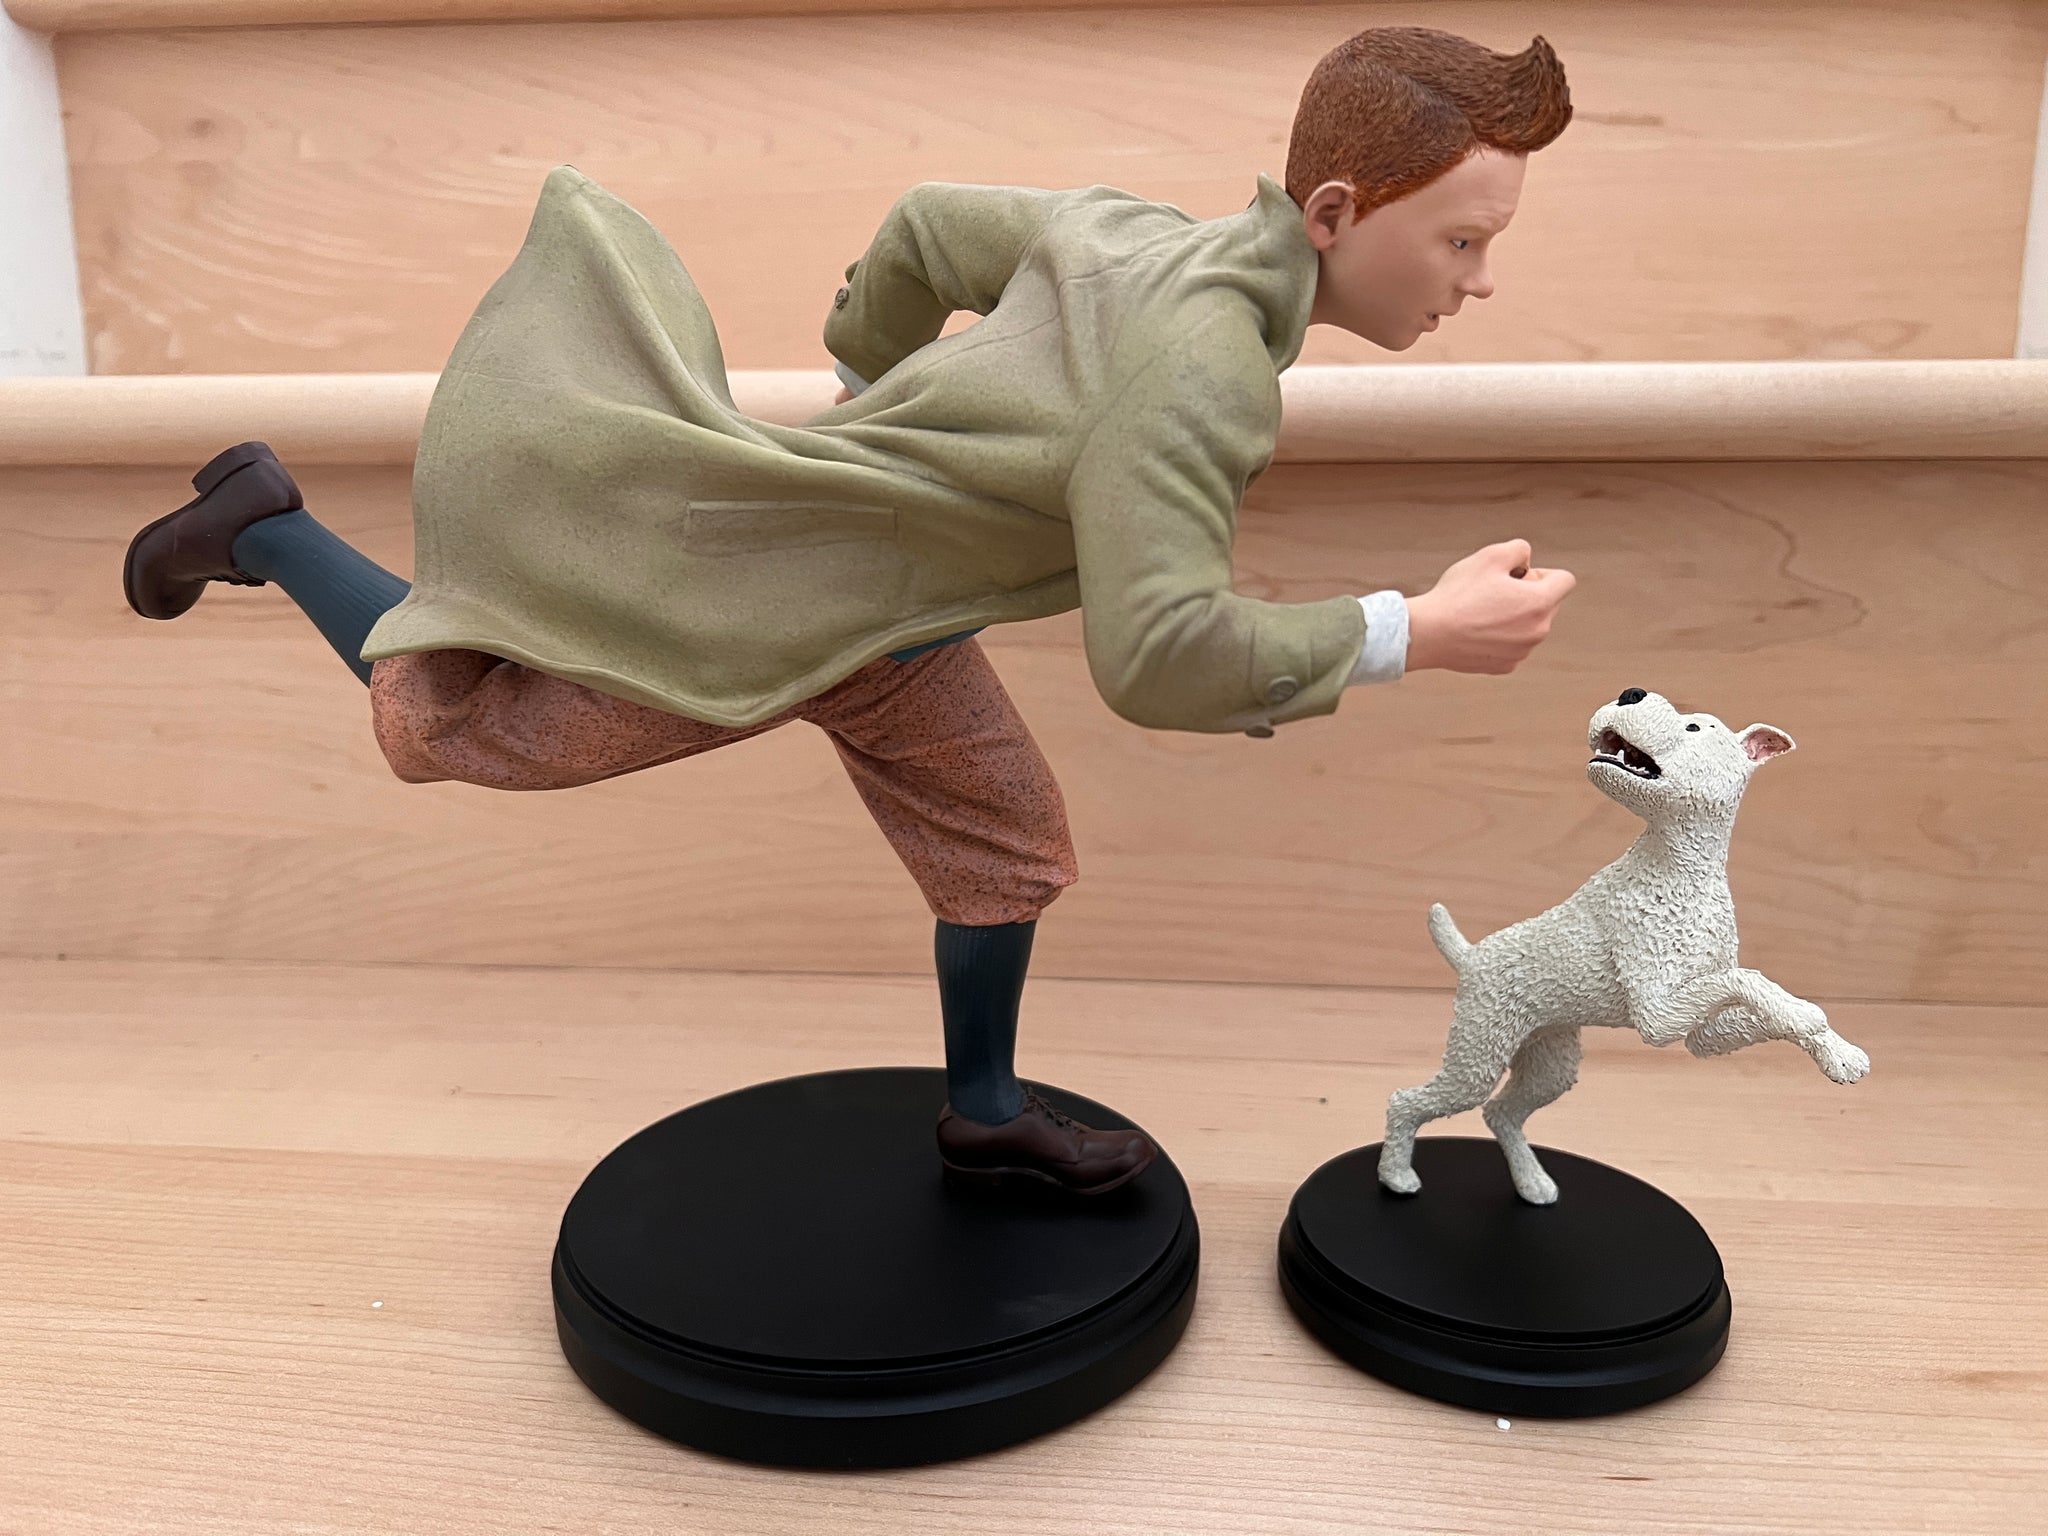 Collectible figurine Tintin in a kilt 8cm (42509)